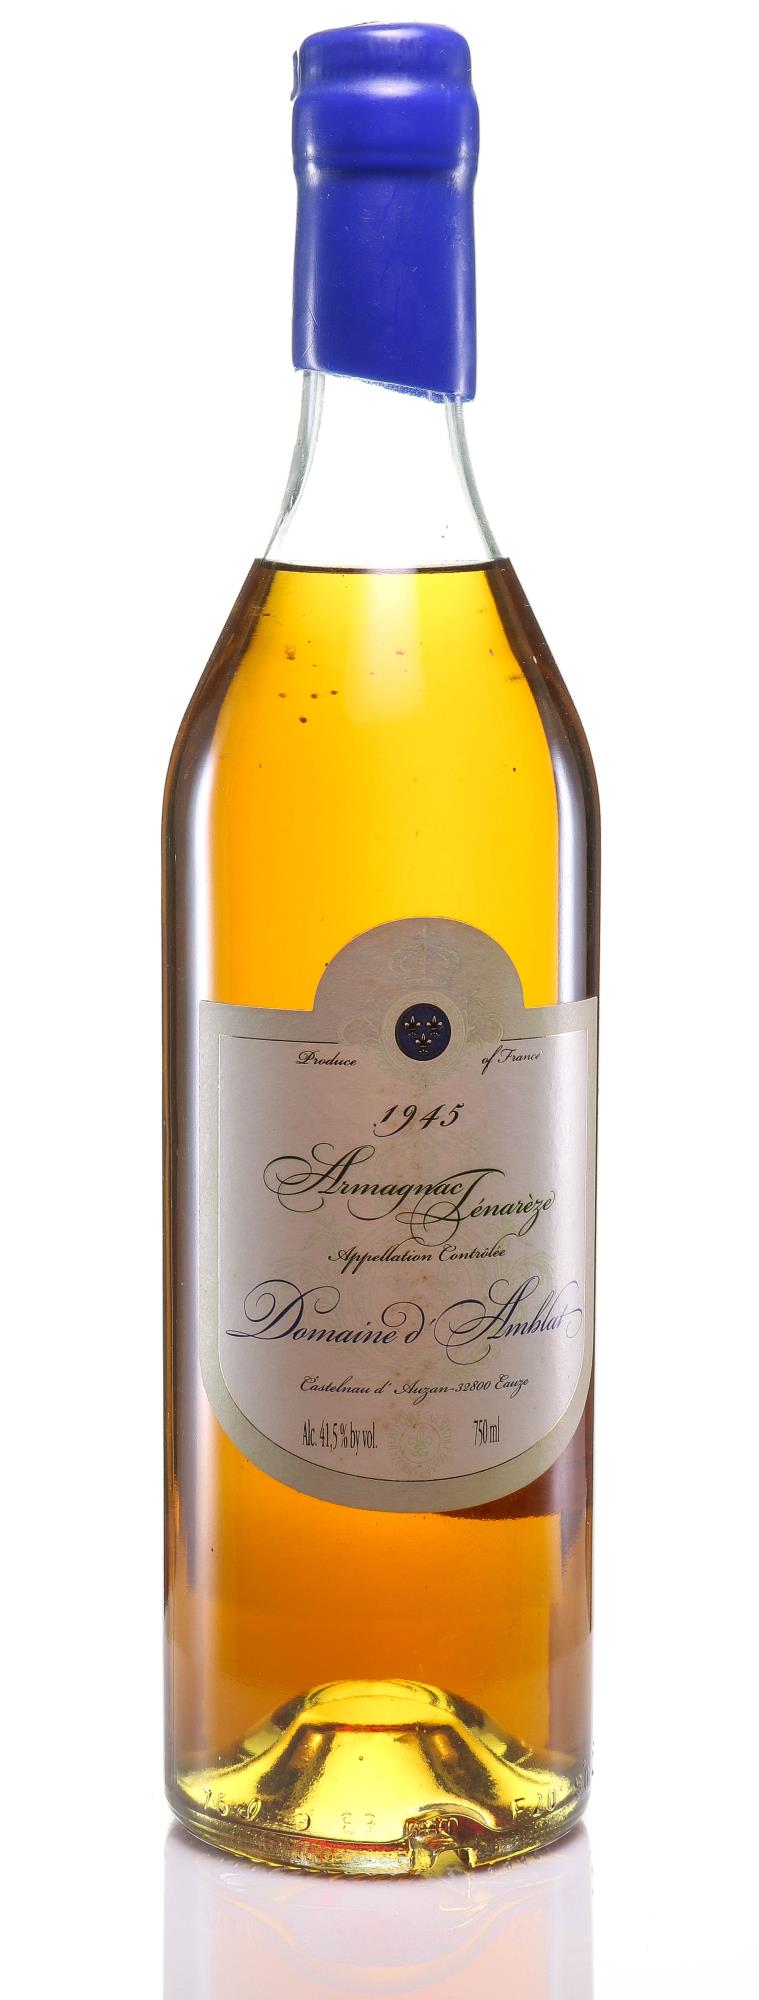 1945 Damblat Ténarèze Armagnac Cognac - Rue Pinard